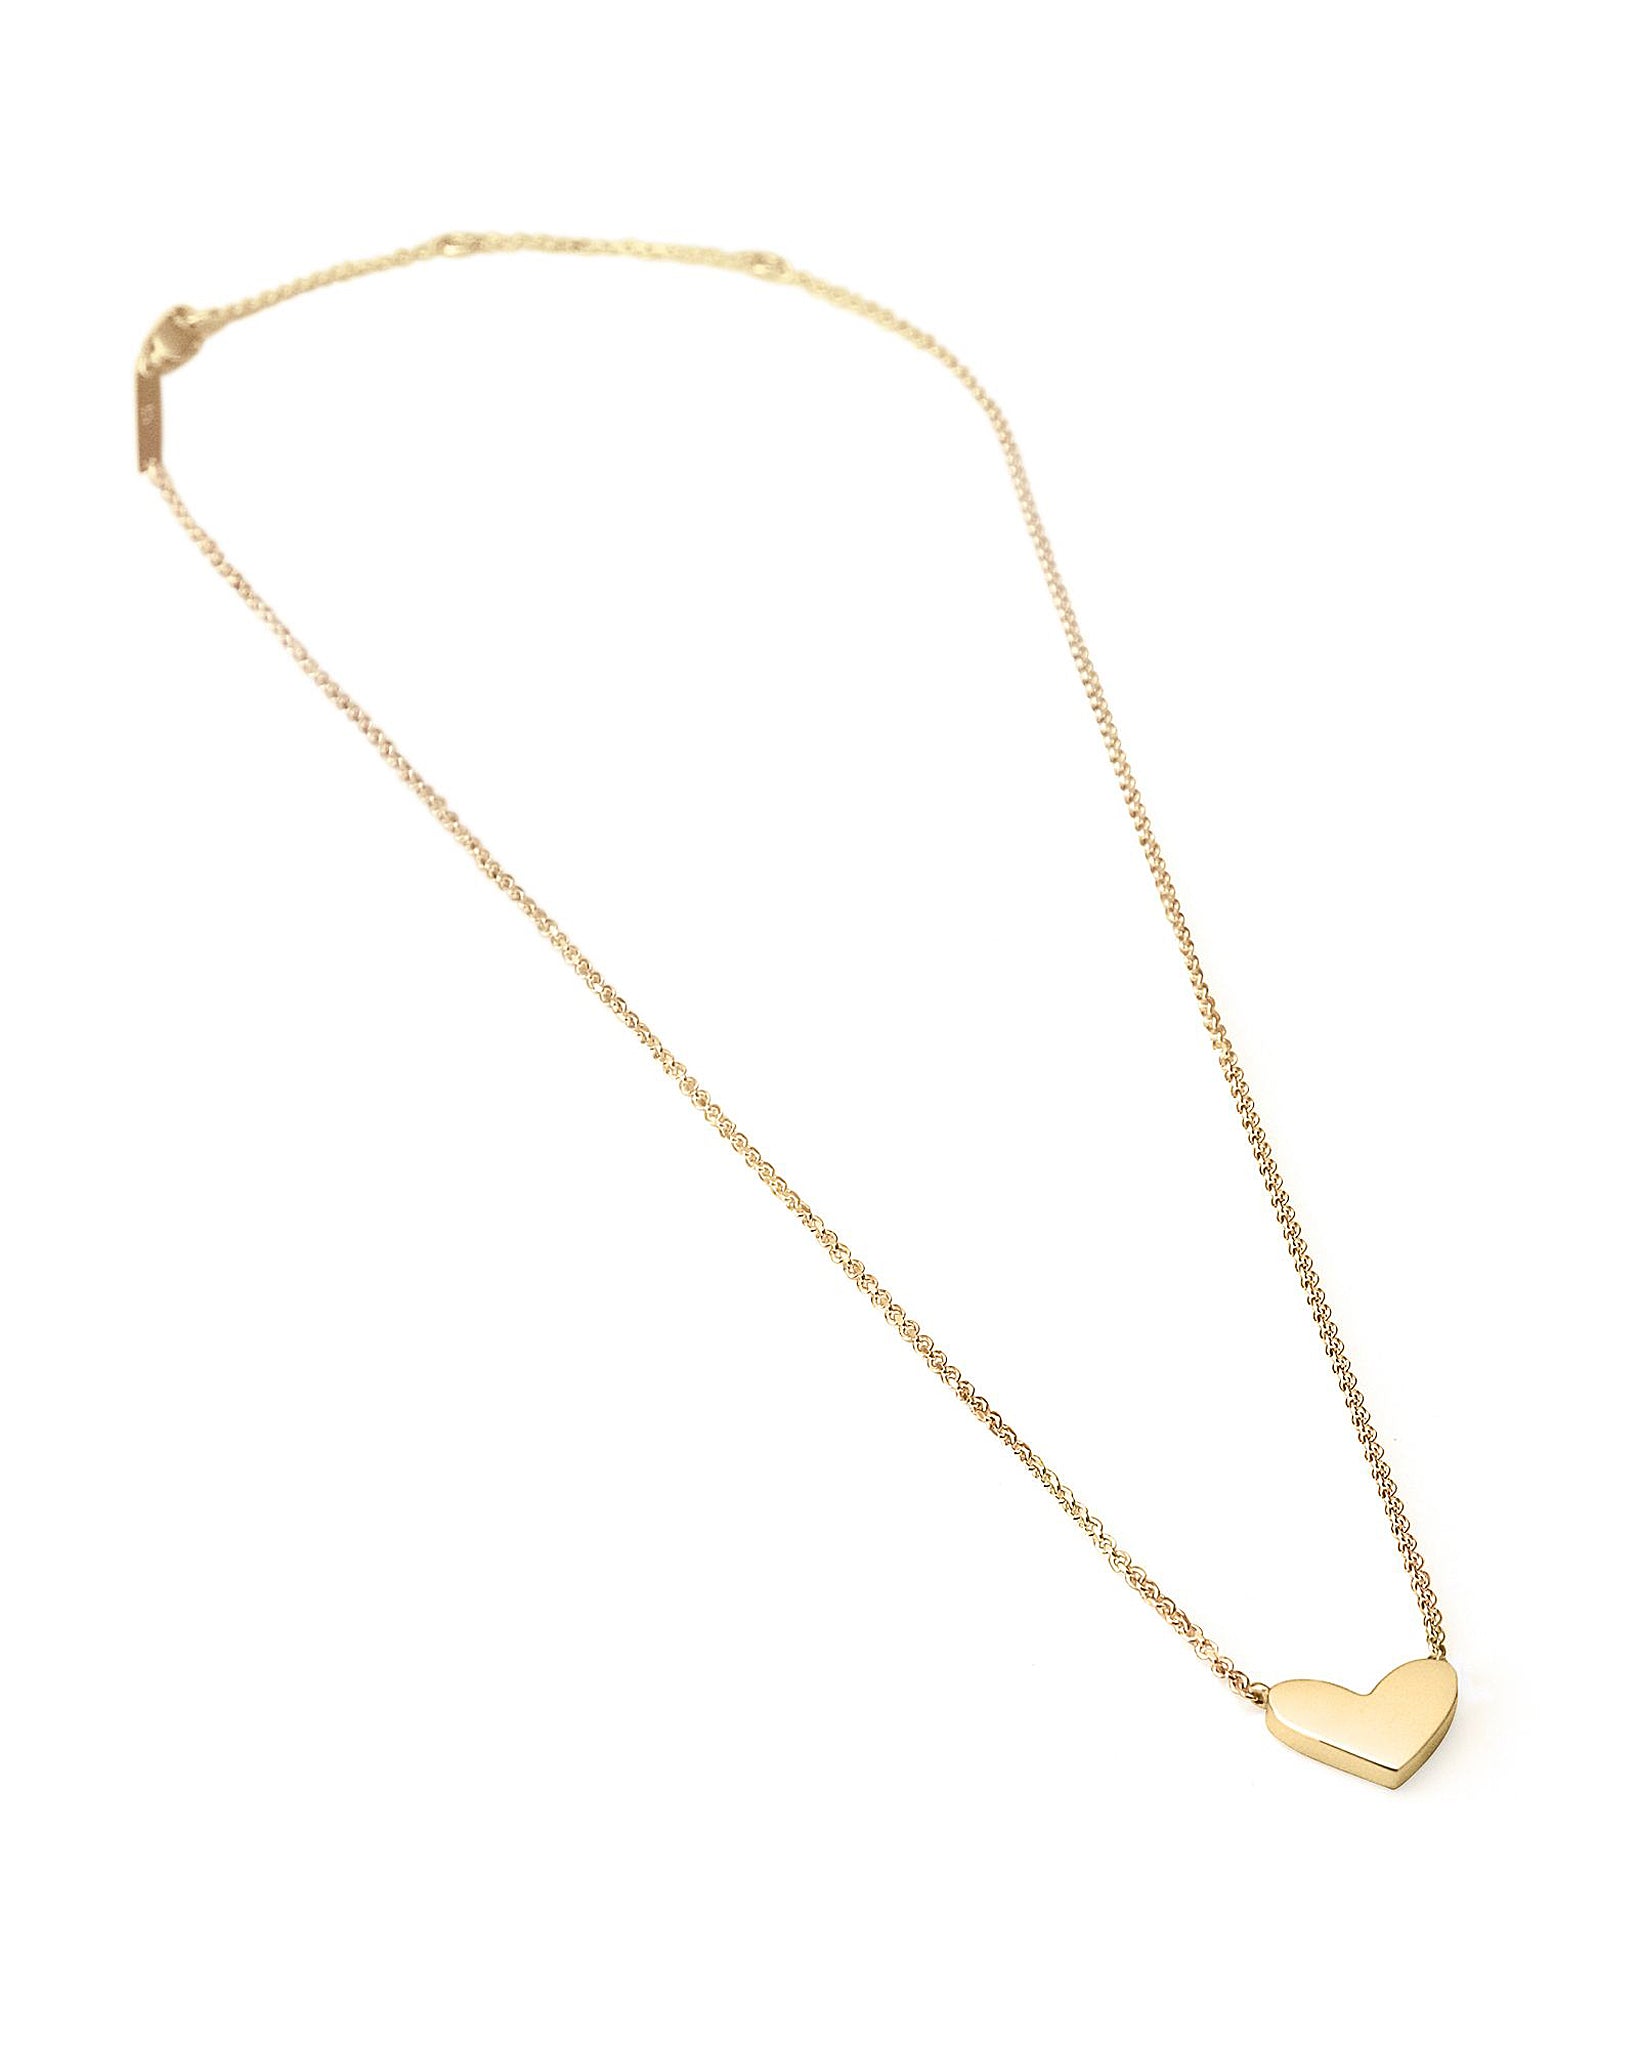 Kendra Scott Ari Heart Pendant Necklace in 18k Gold Vermeil